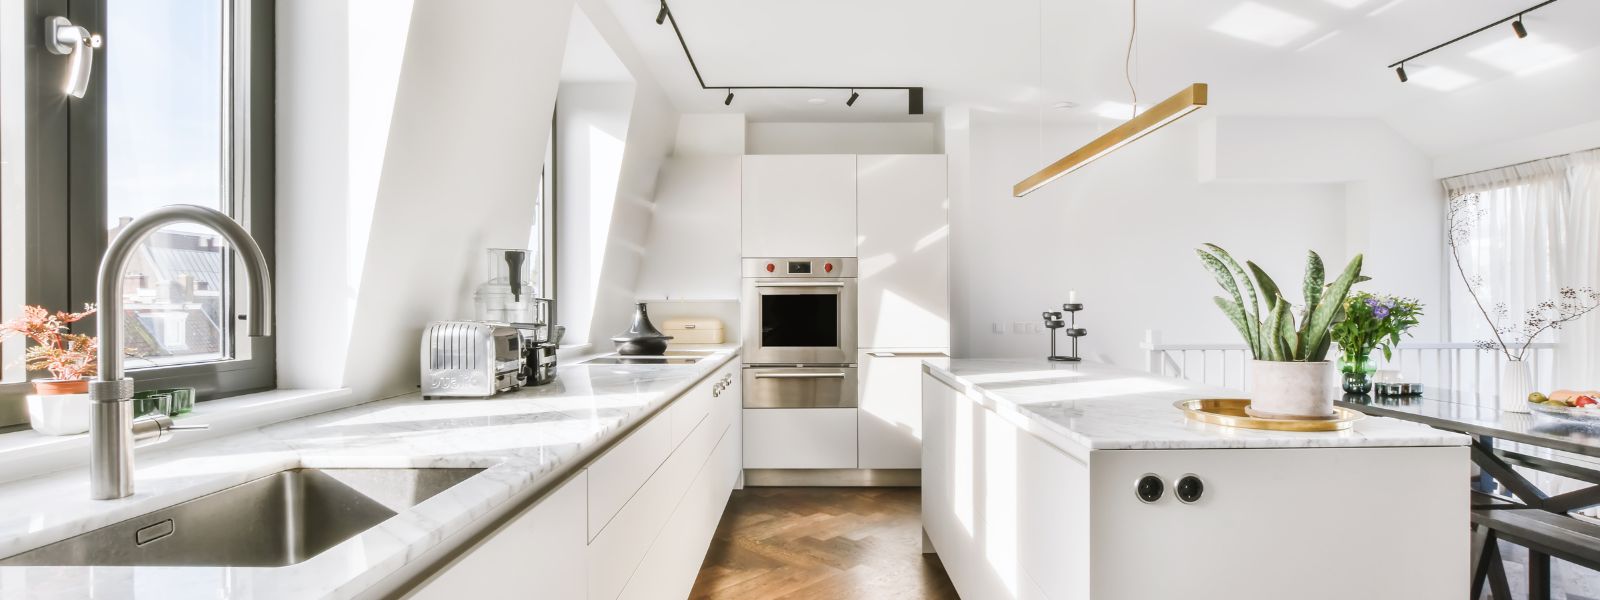 white kitchen with stone worktops